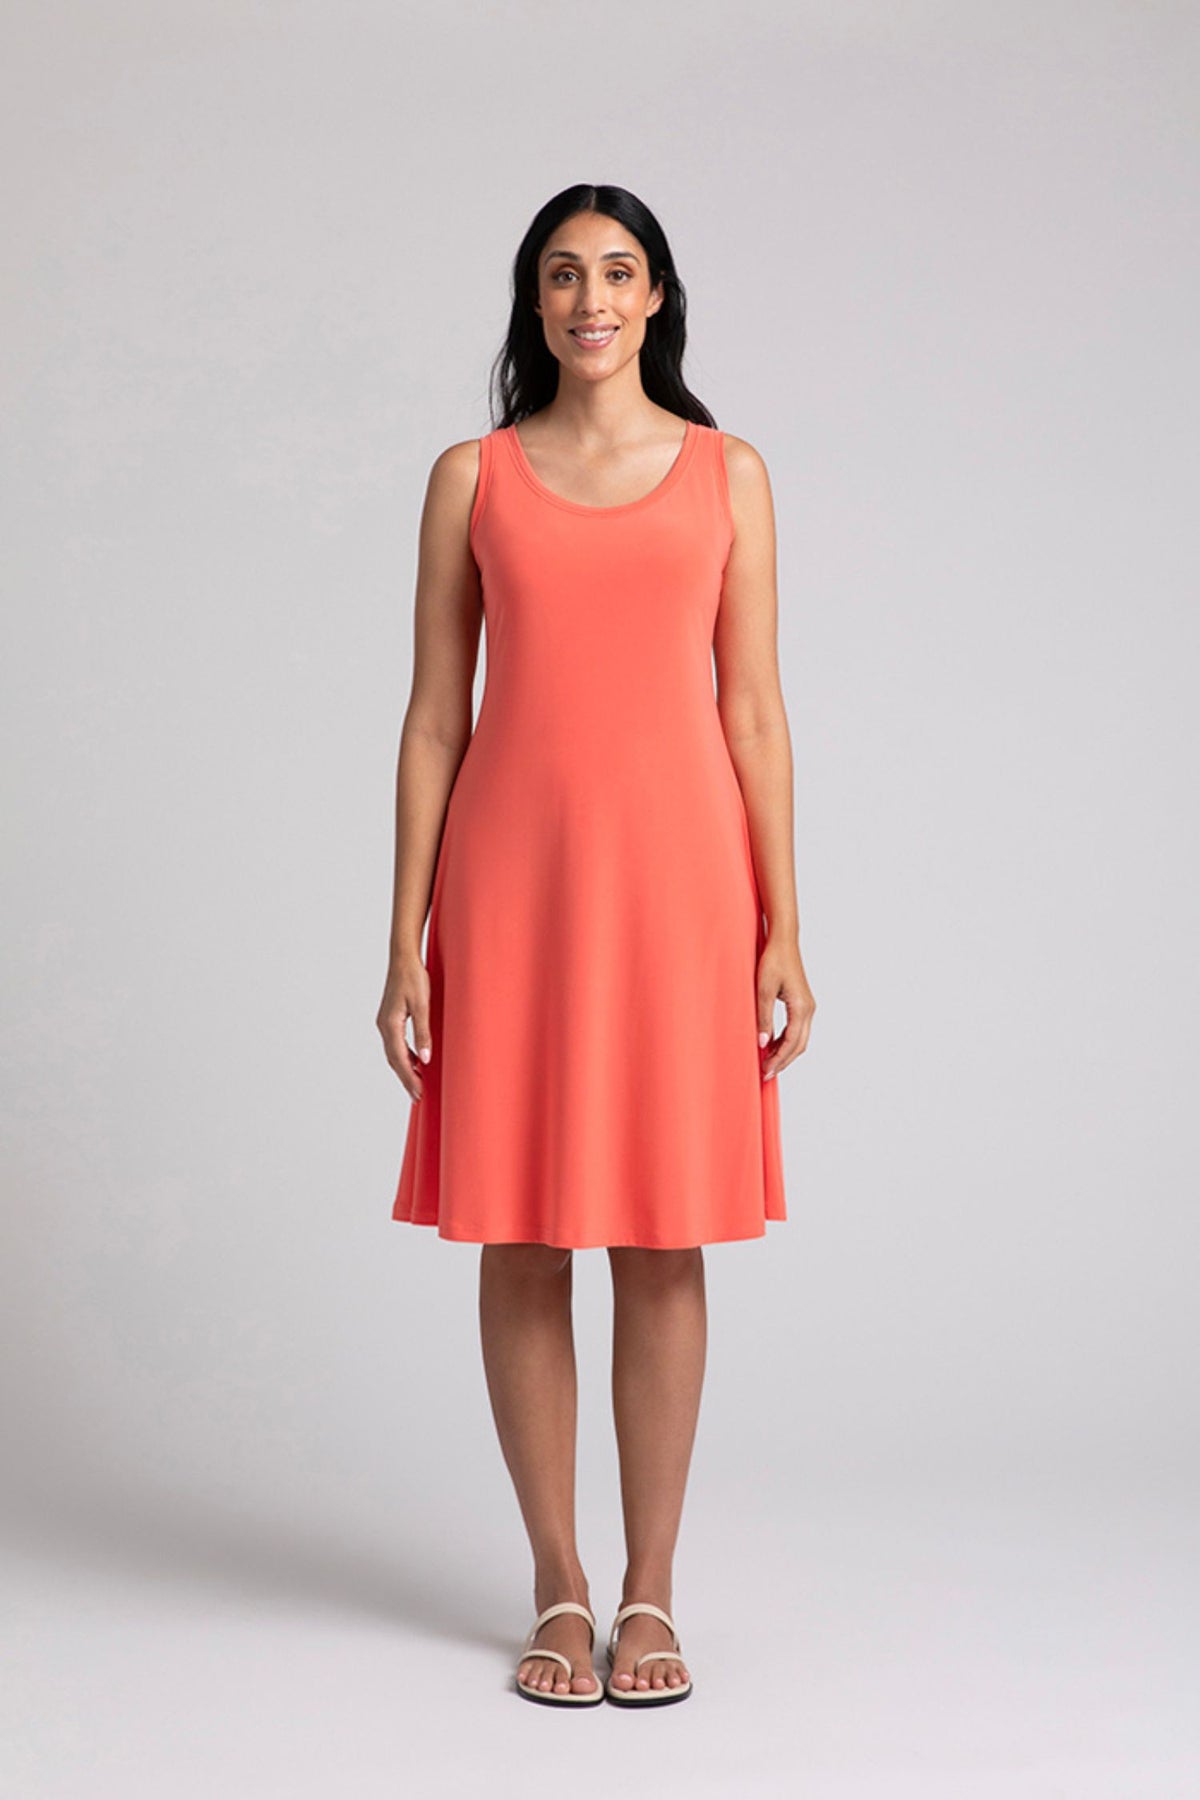 Sympli Nu Tank Dress - Style 28176, front, coral